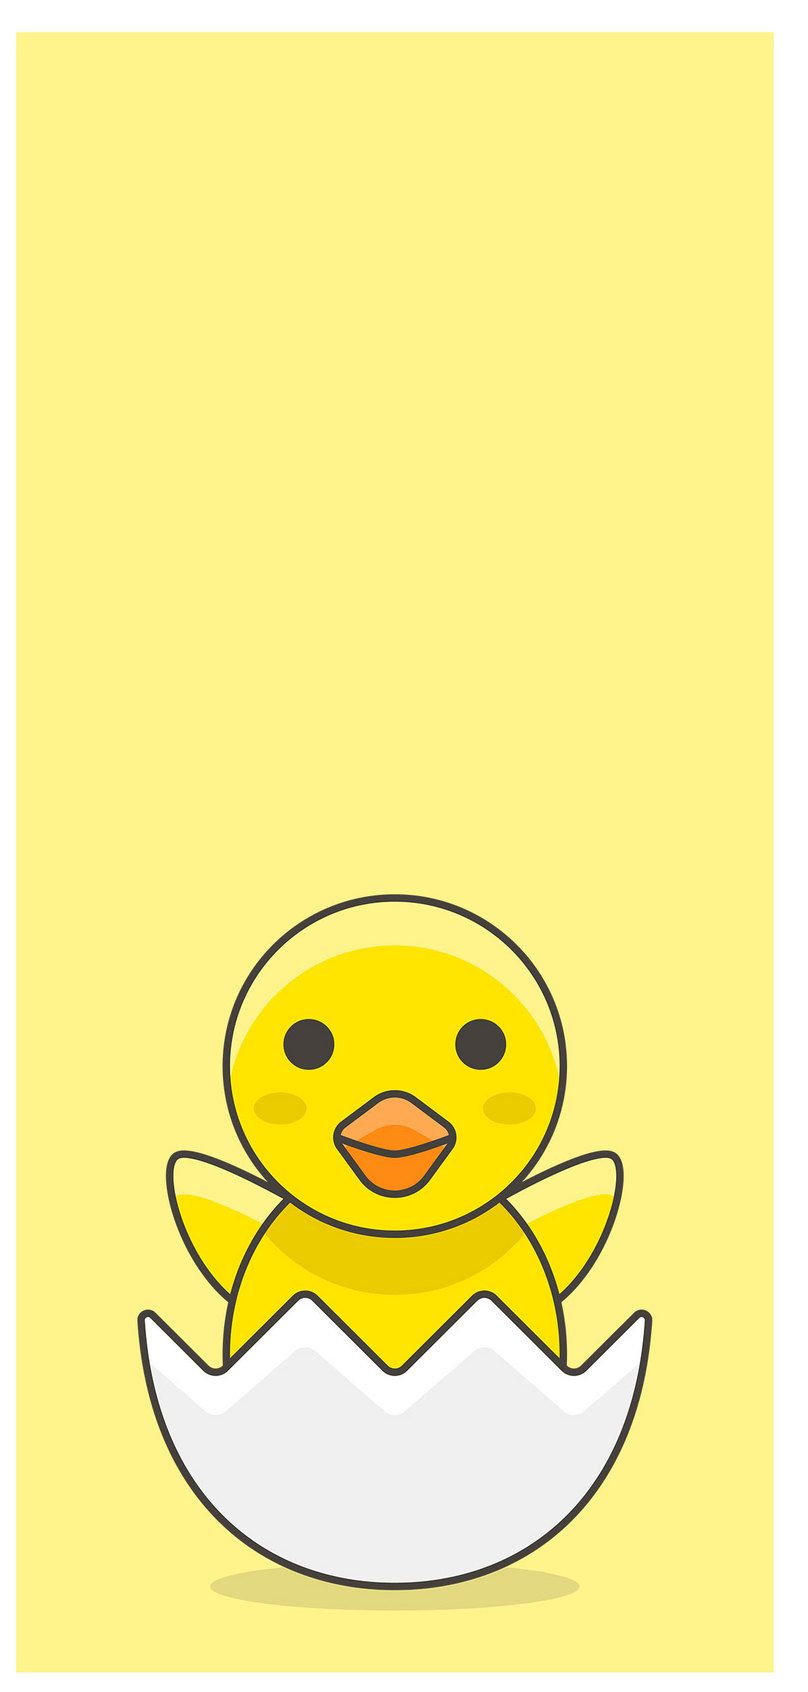 Cartoon Duck Mobile Phone Wallpaper Background Image Free Download 400533908 Lovepik.com